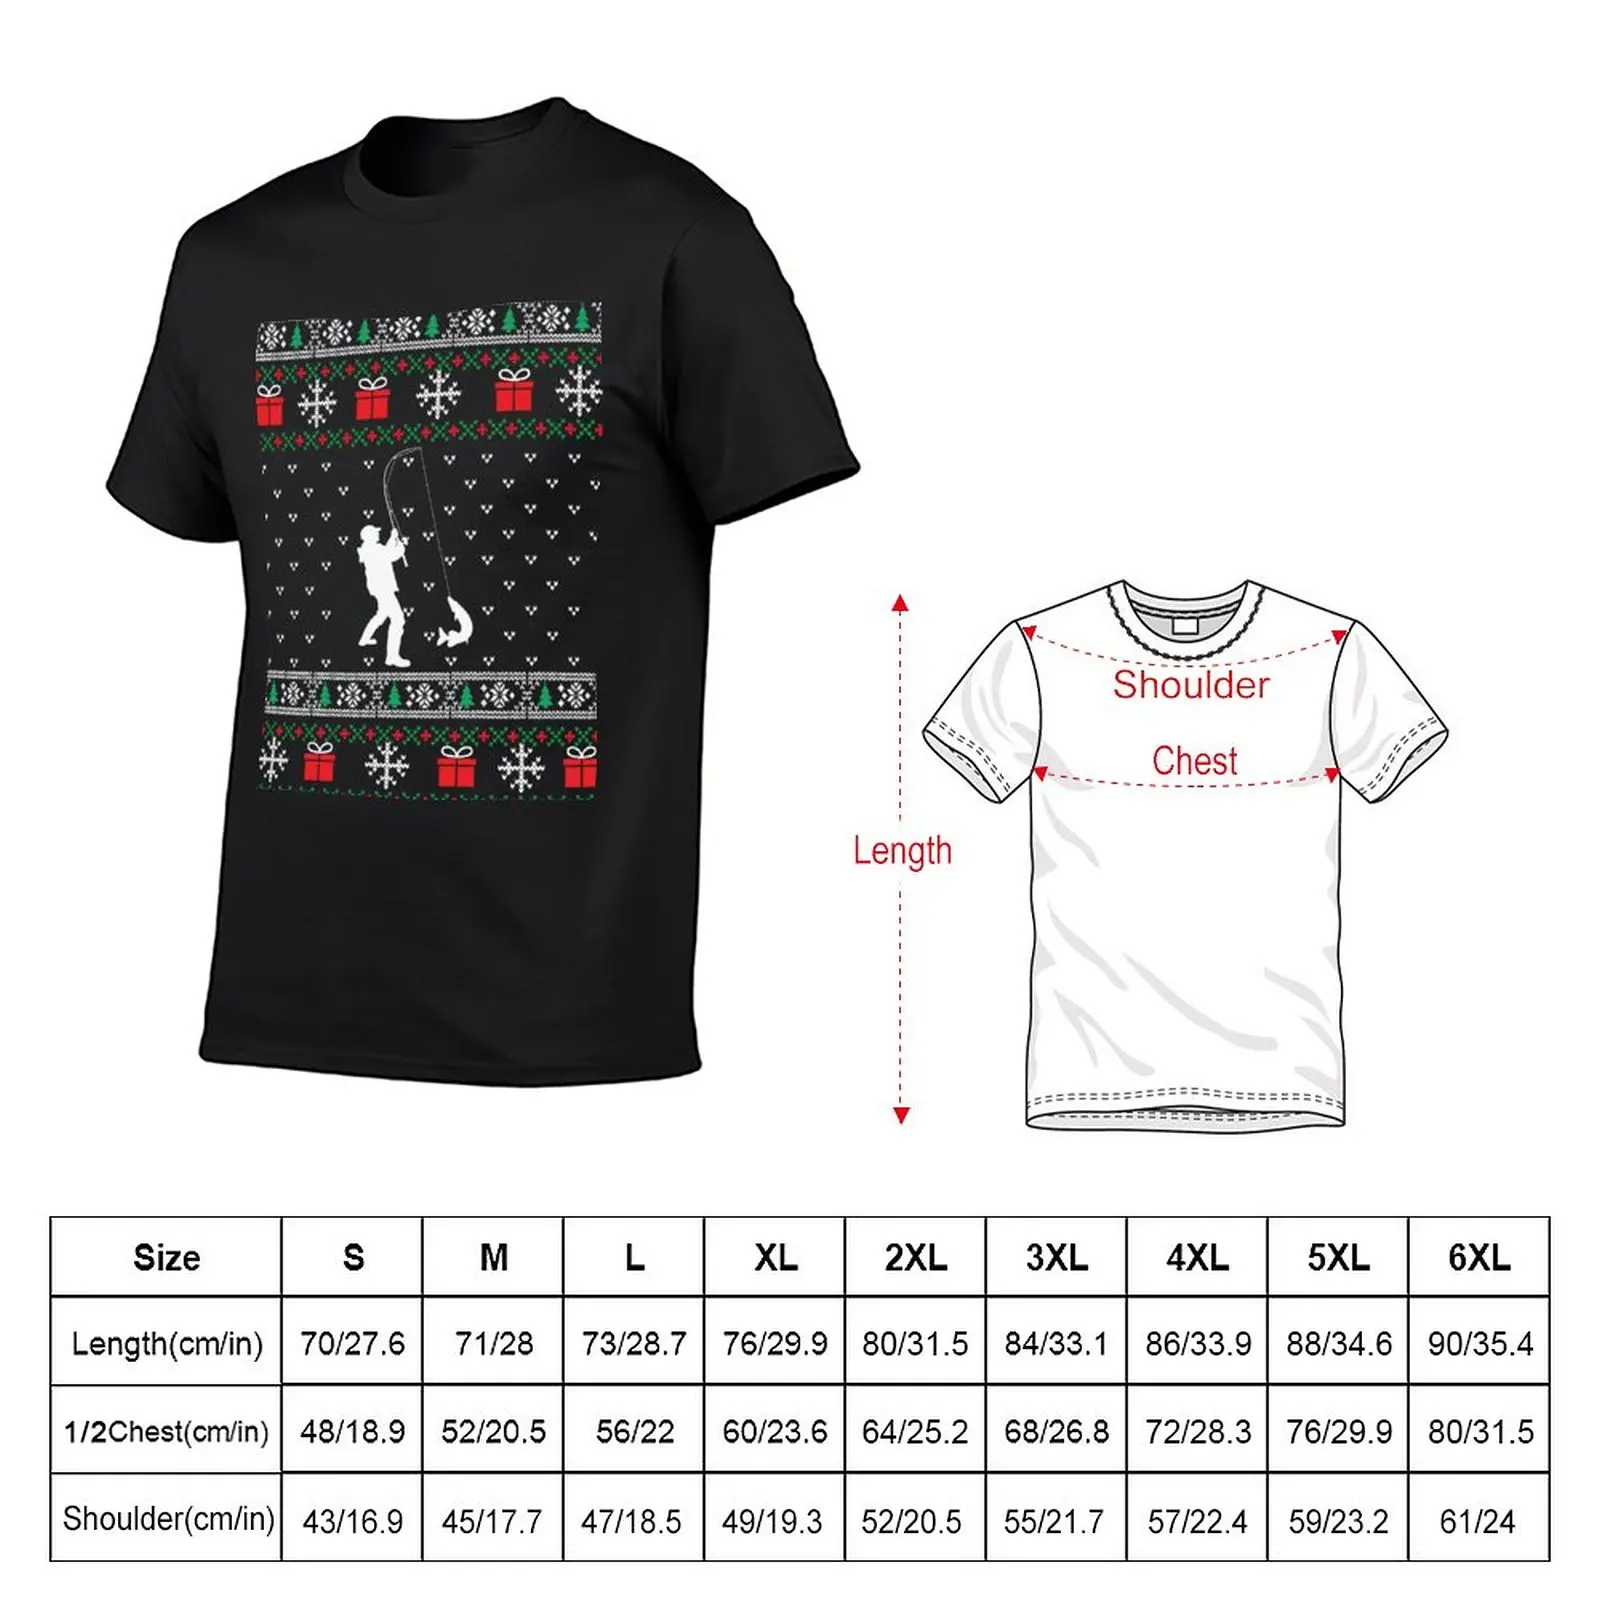 https://ae01.alicdn.com/kf/S123c0ce2843743e8838763e533956ebdy/Merry-Fishmas-Fishing-Ugly-Christmas-Sweater-Funny-Christmas-jumper-T-Shirt-cute-tops-quick-drying-shirt.jpg